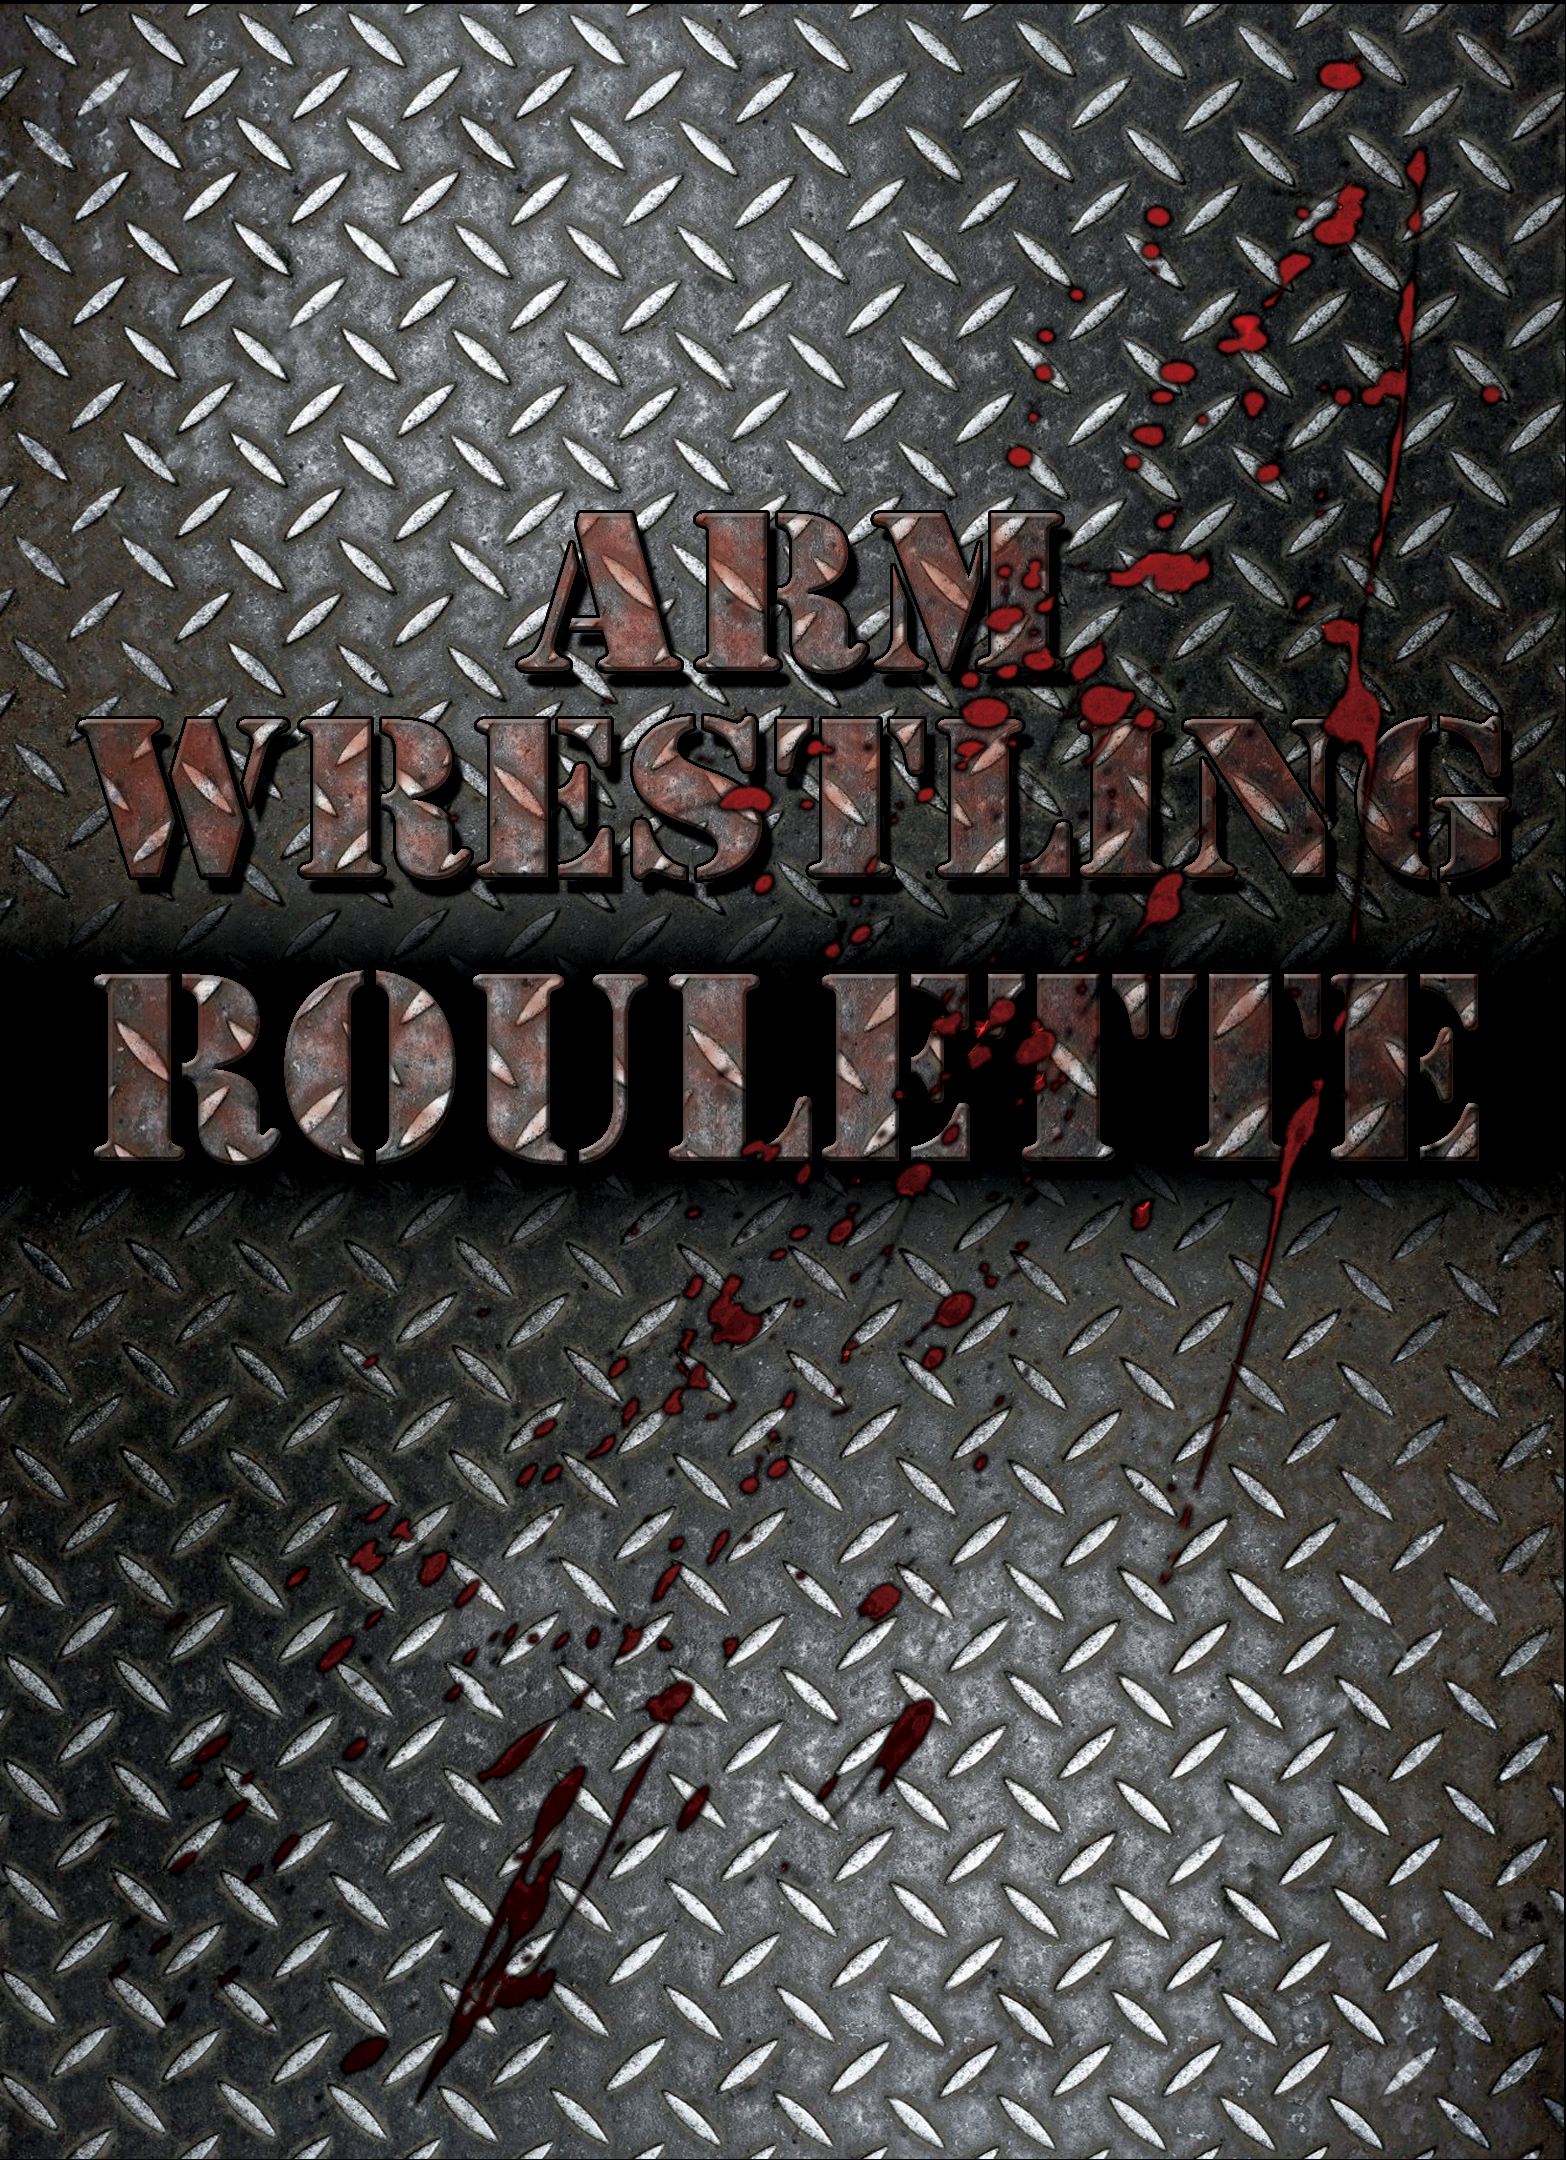 Arm Wrestling Roulette (2019)